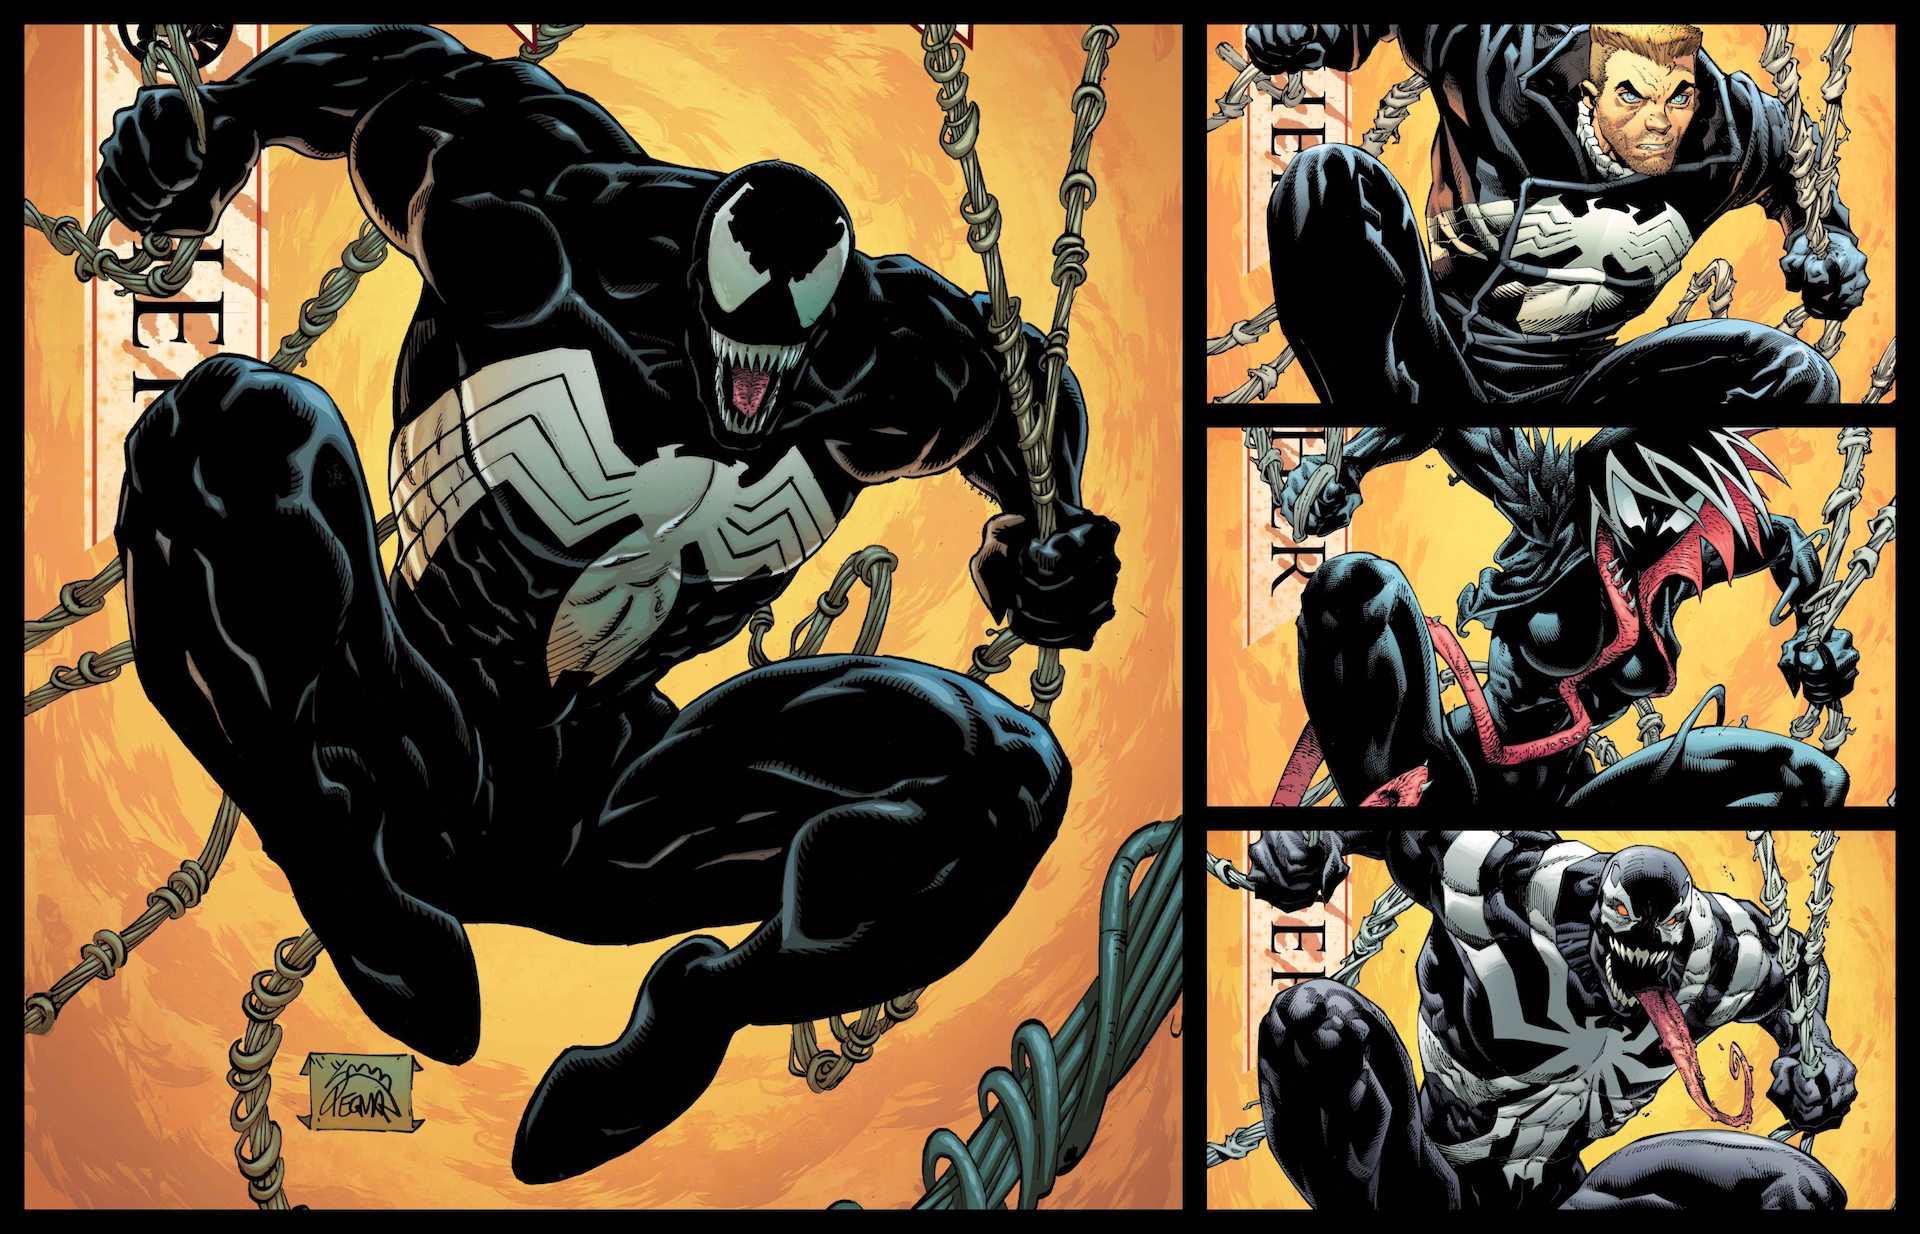 Ryan Stegman Symbiote variant cover series starts May 2023